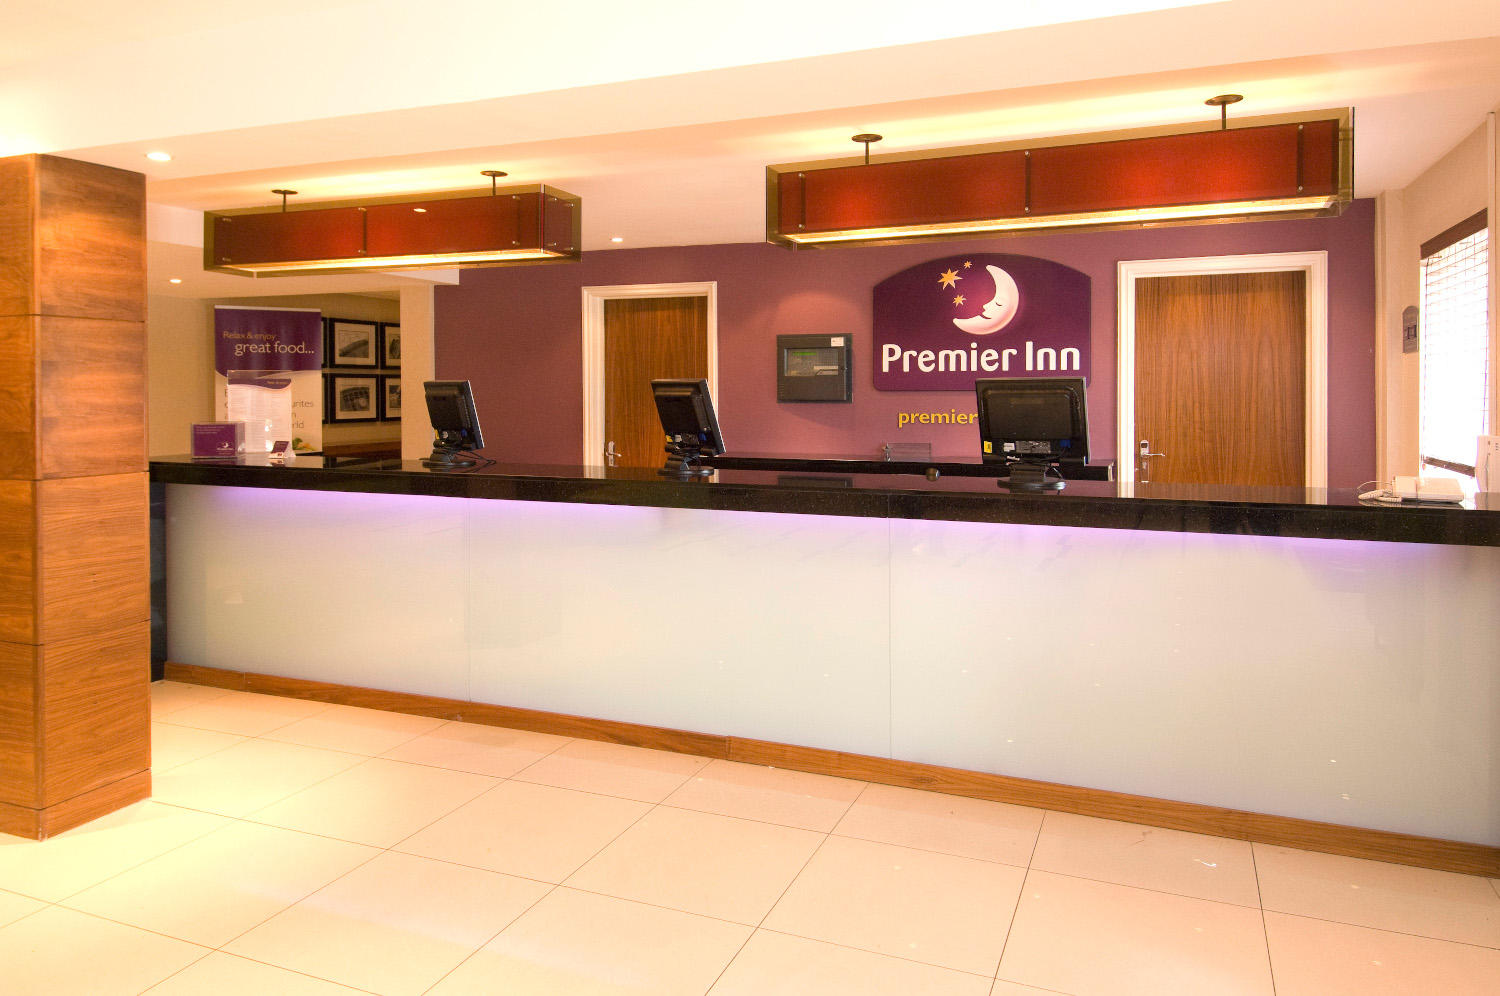 Premier Inn reception Premier Inn Manchester Old Trafford hotel Manchester 03333 211315